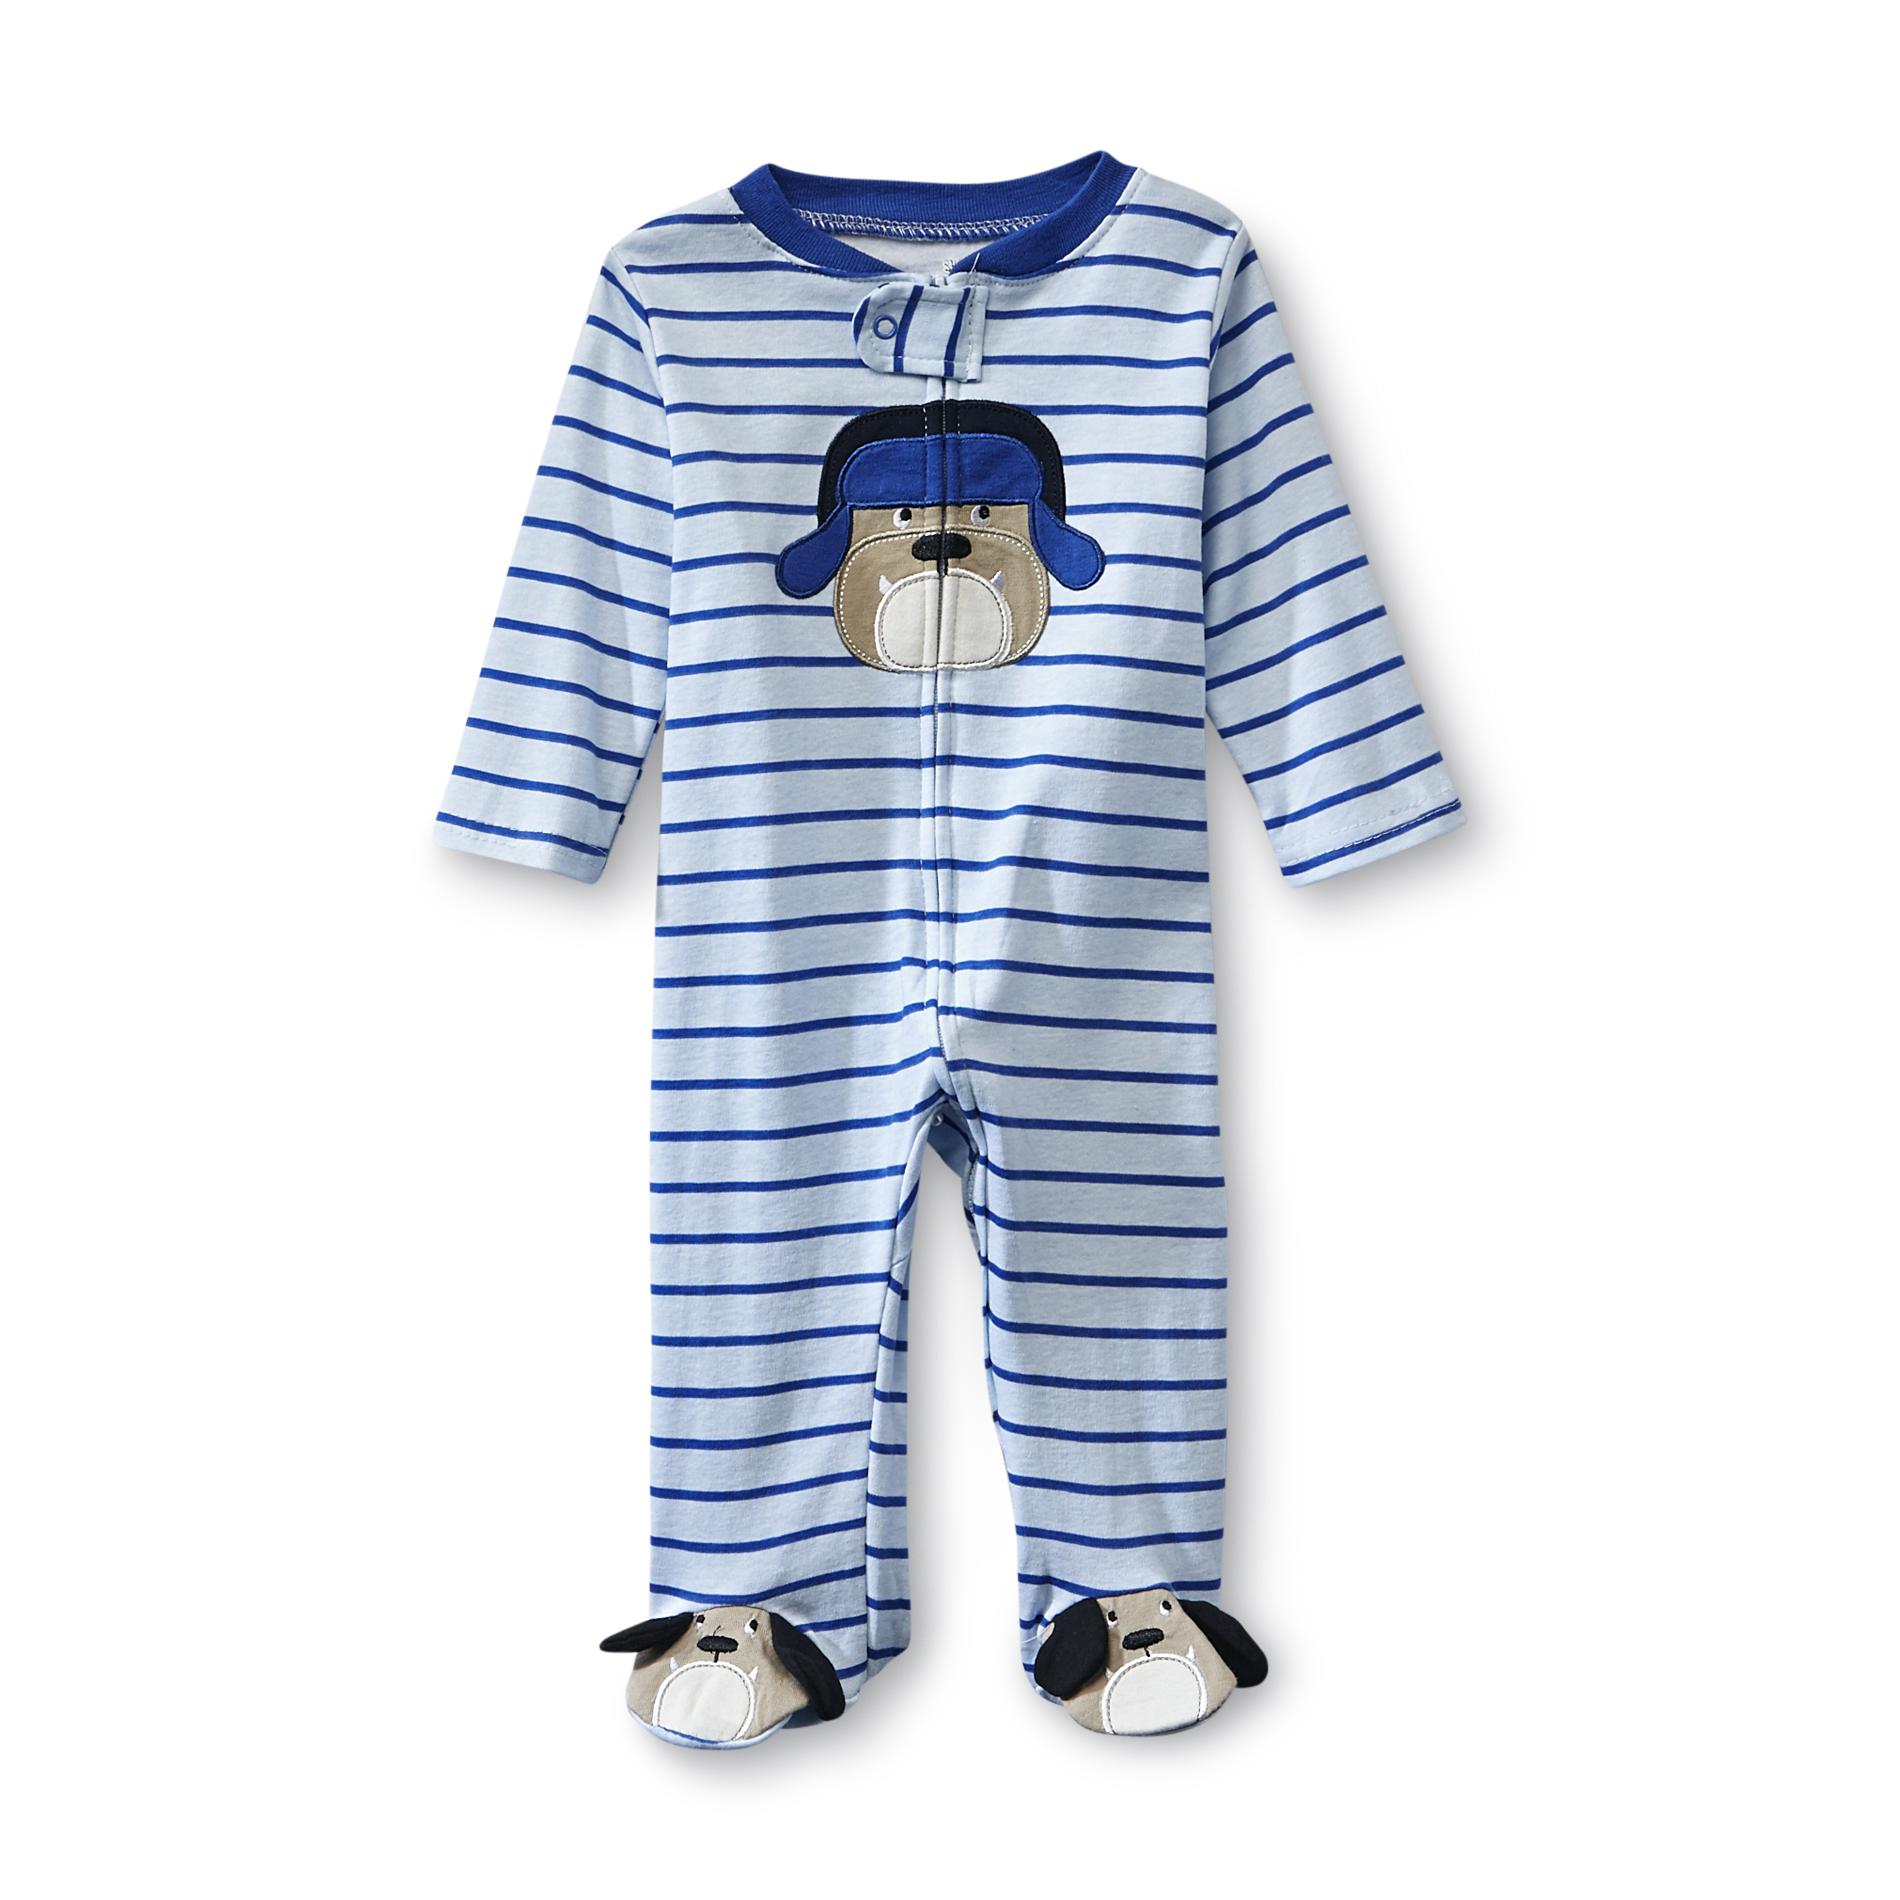 Small Wonders Boys' Blue Striped One-Piece Footed Pajamas